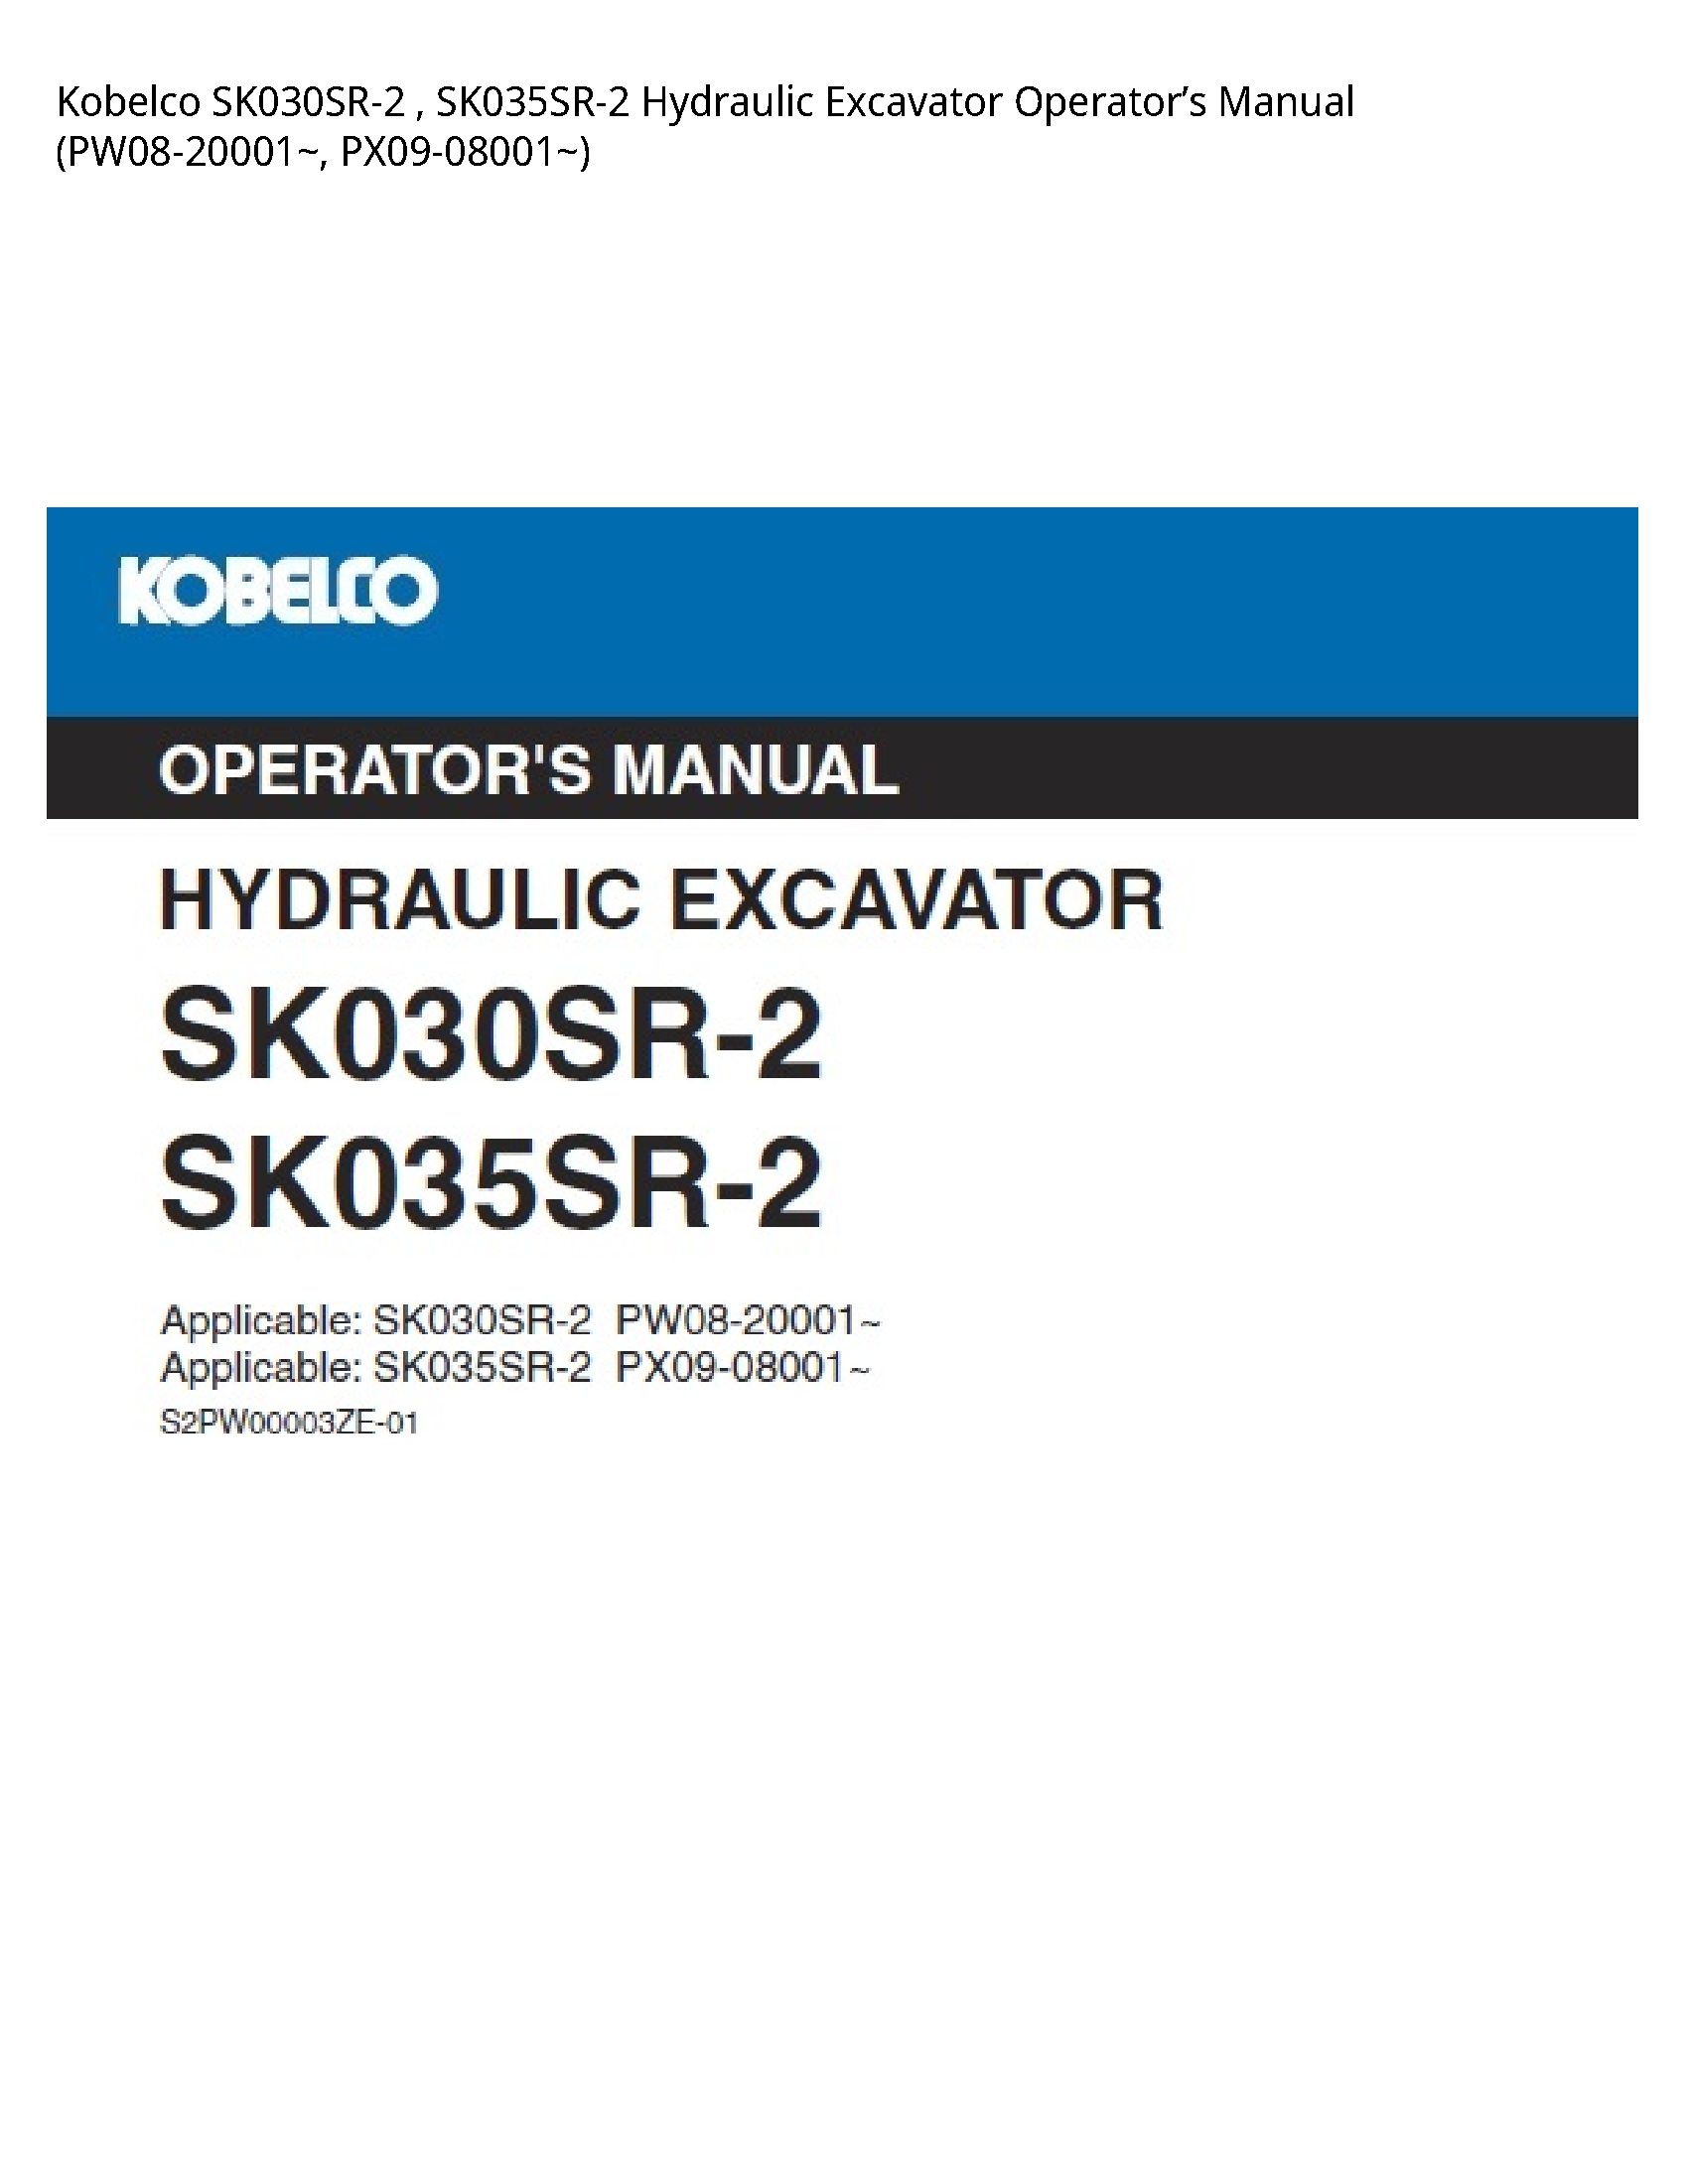 Kobelco SK030SR-2 Hydraulic Excavator Operator’s manual